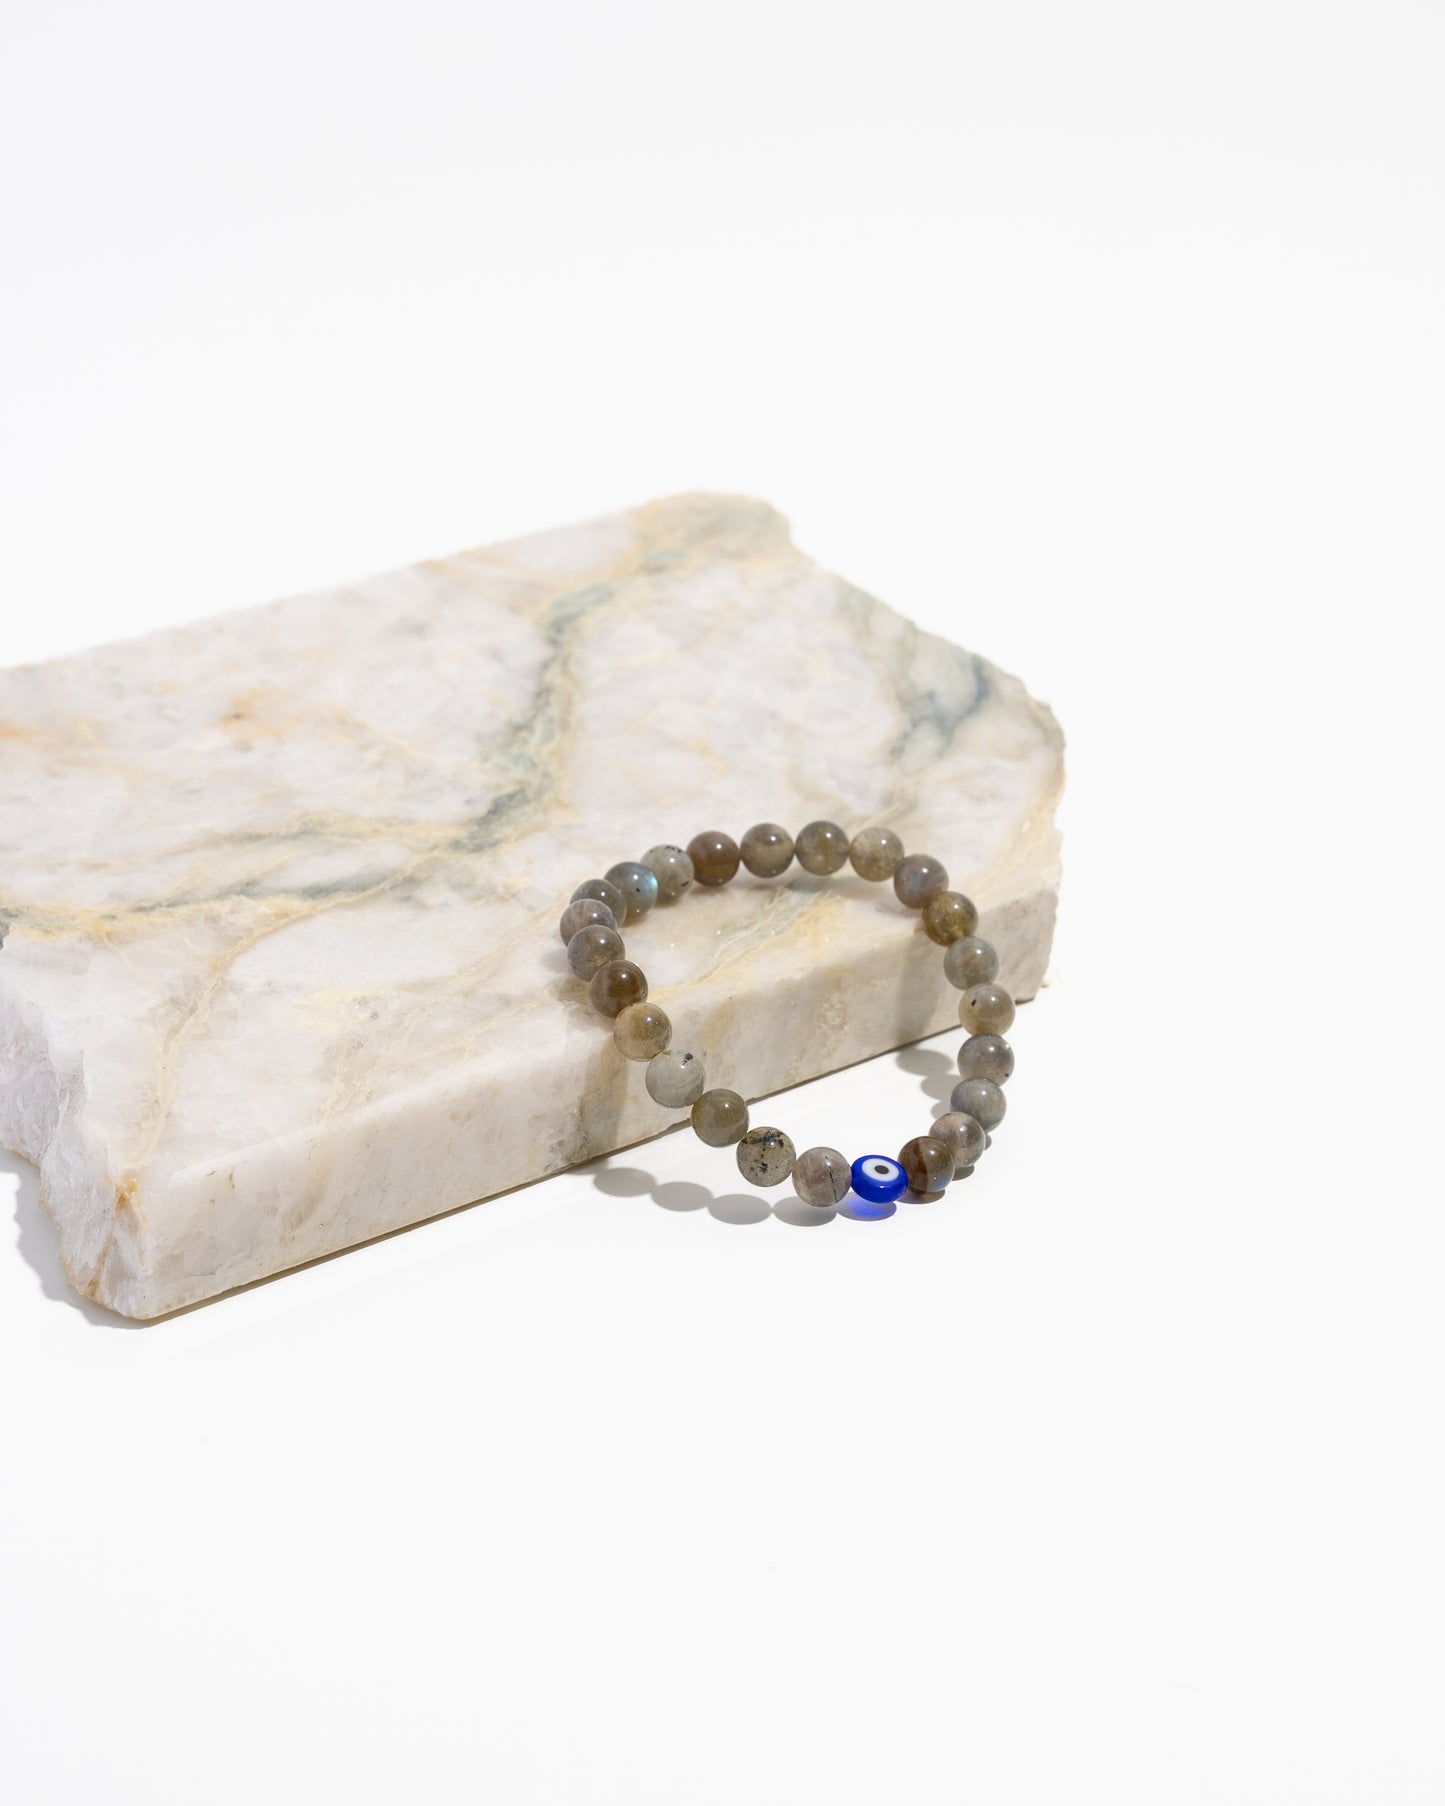 Labradorite and Evil eye Mala bracelet from Think Unique